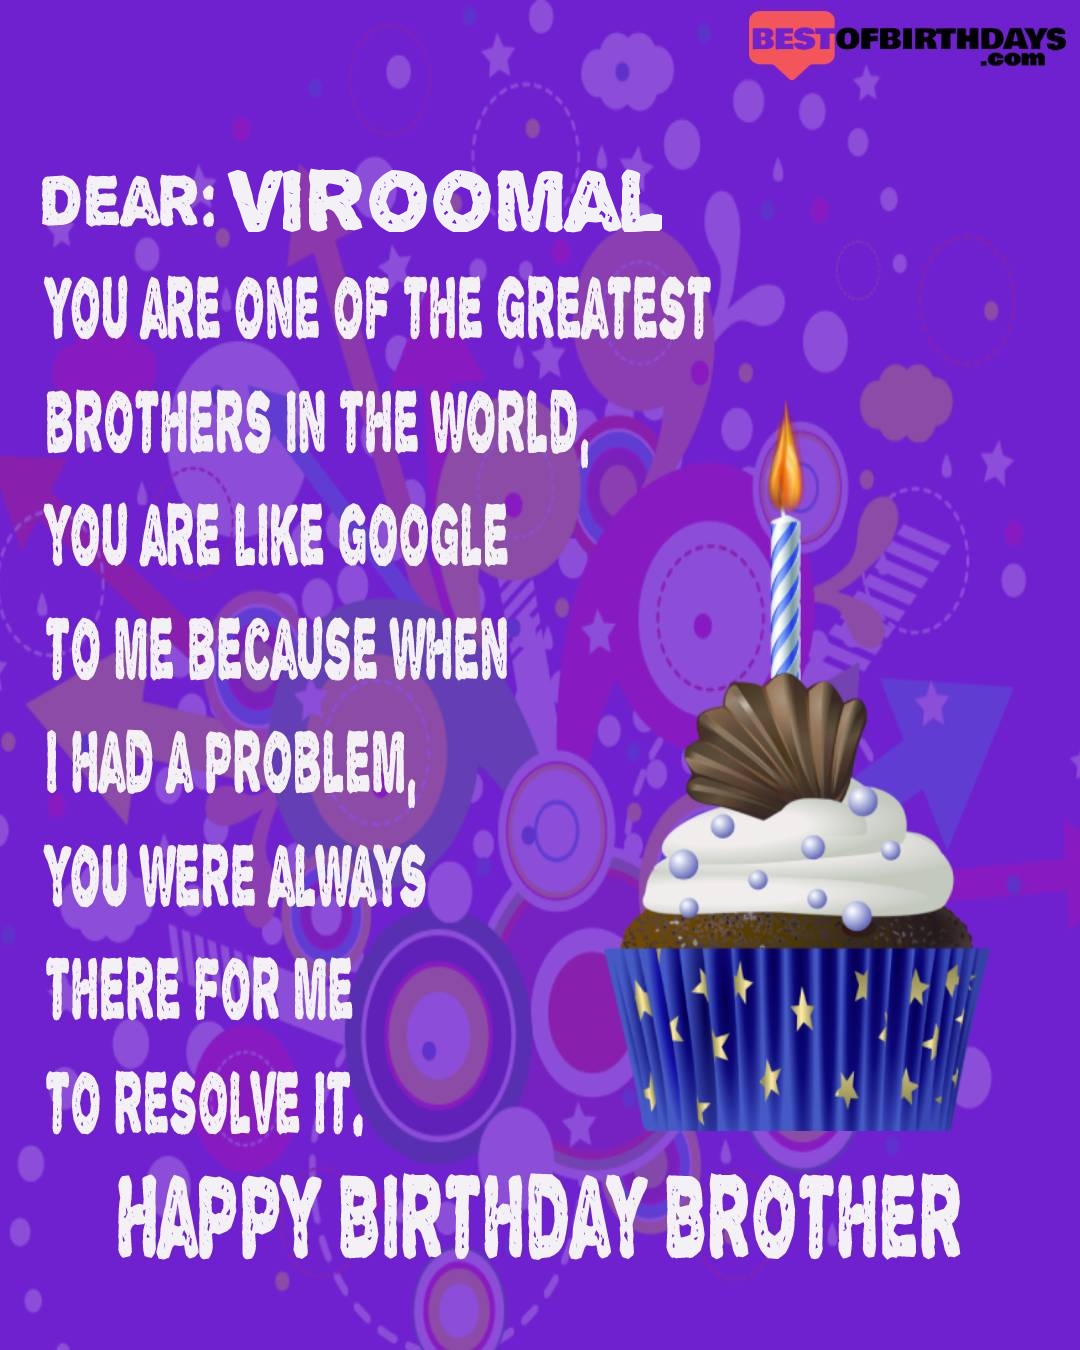 Happy birthday viroomal bhai brother bro